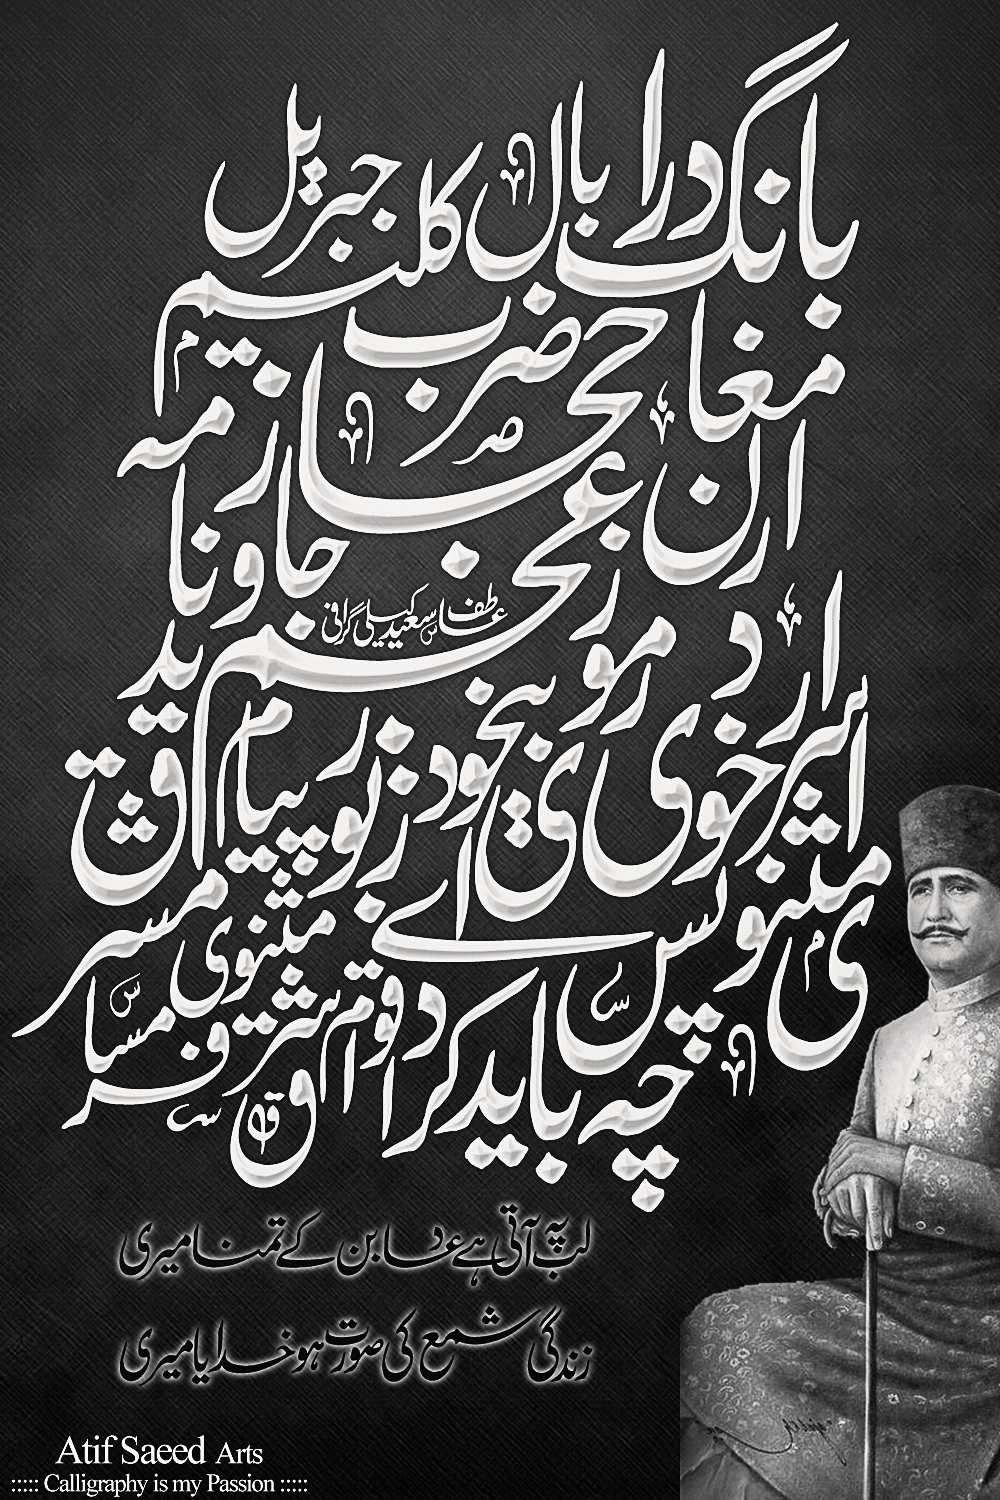 allama_iqbal_calligraphy_by_atifsaeedicmap-d6k2woc.png